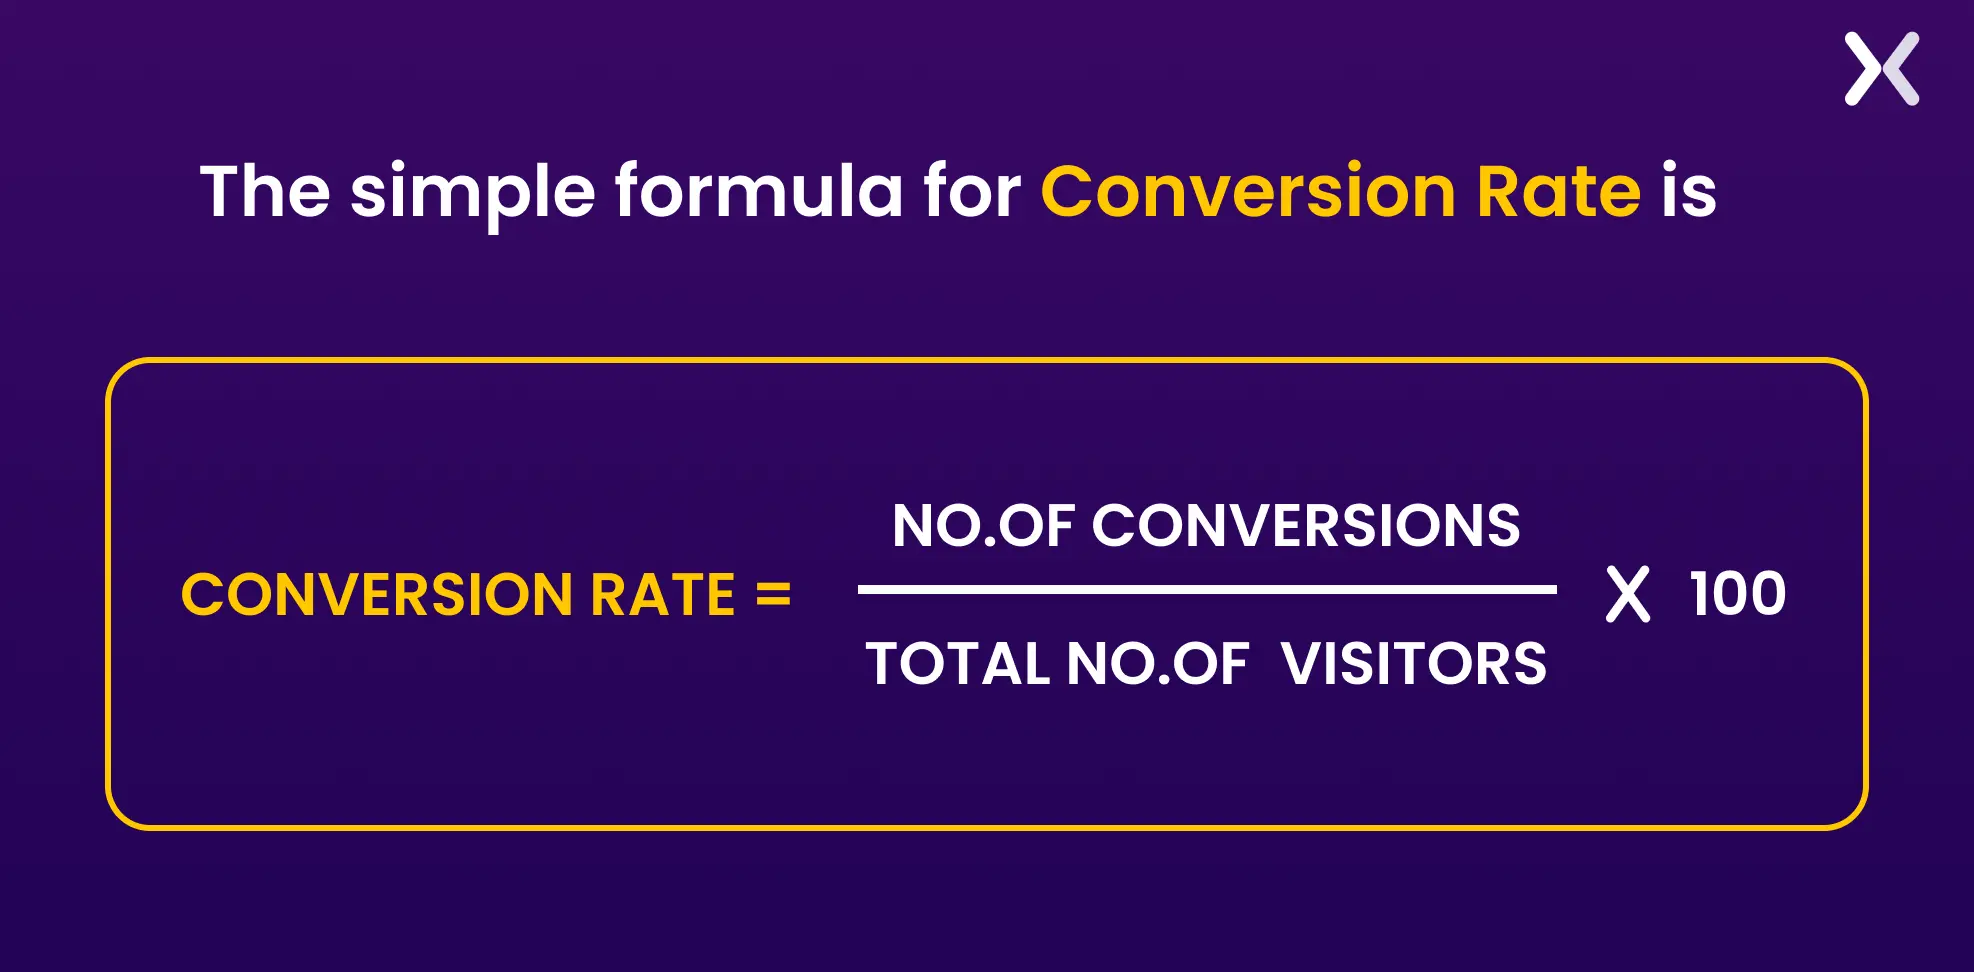 conversion-rate-formula-for-landing-pages.webp